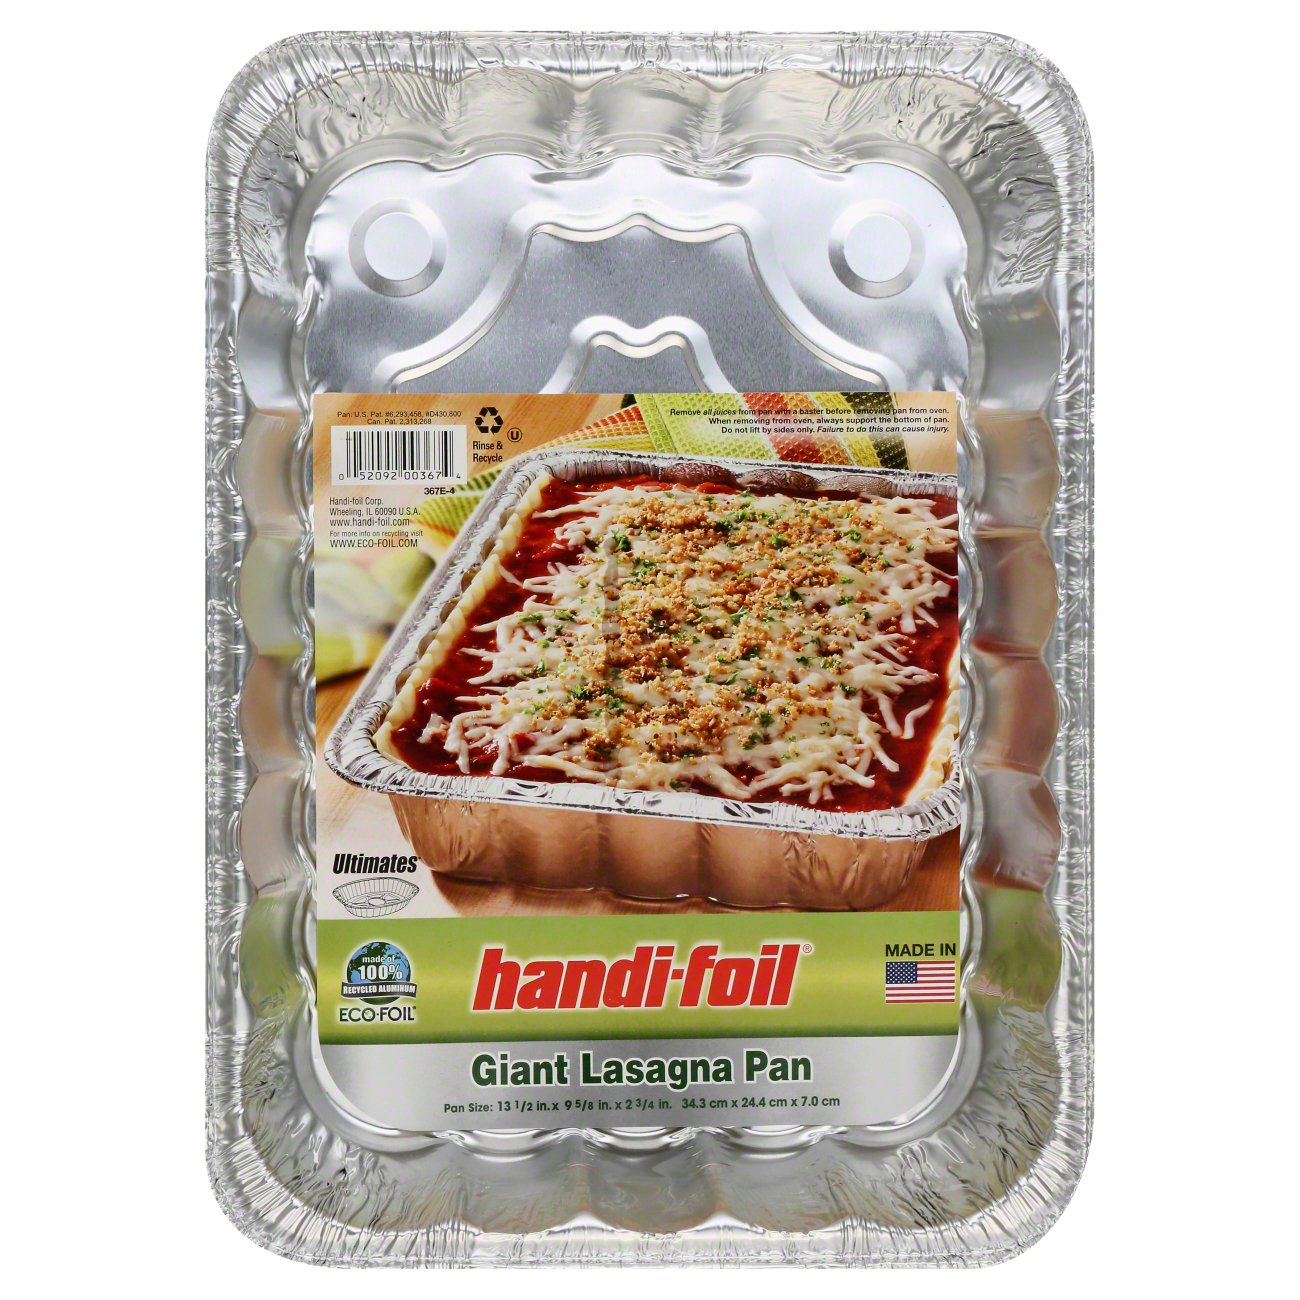 Handi-Foil Eco-Foil Giant Lasagna Pan - Shop Bakeware at H-E-B